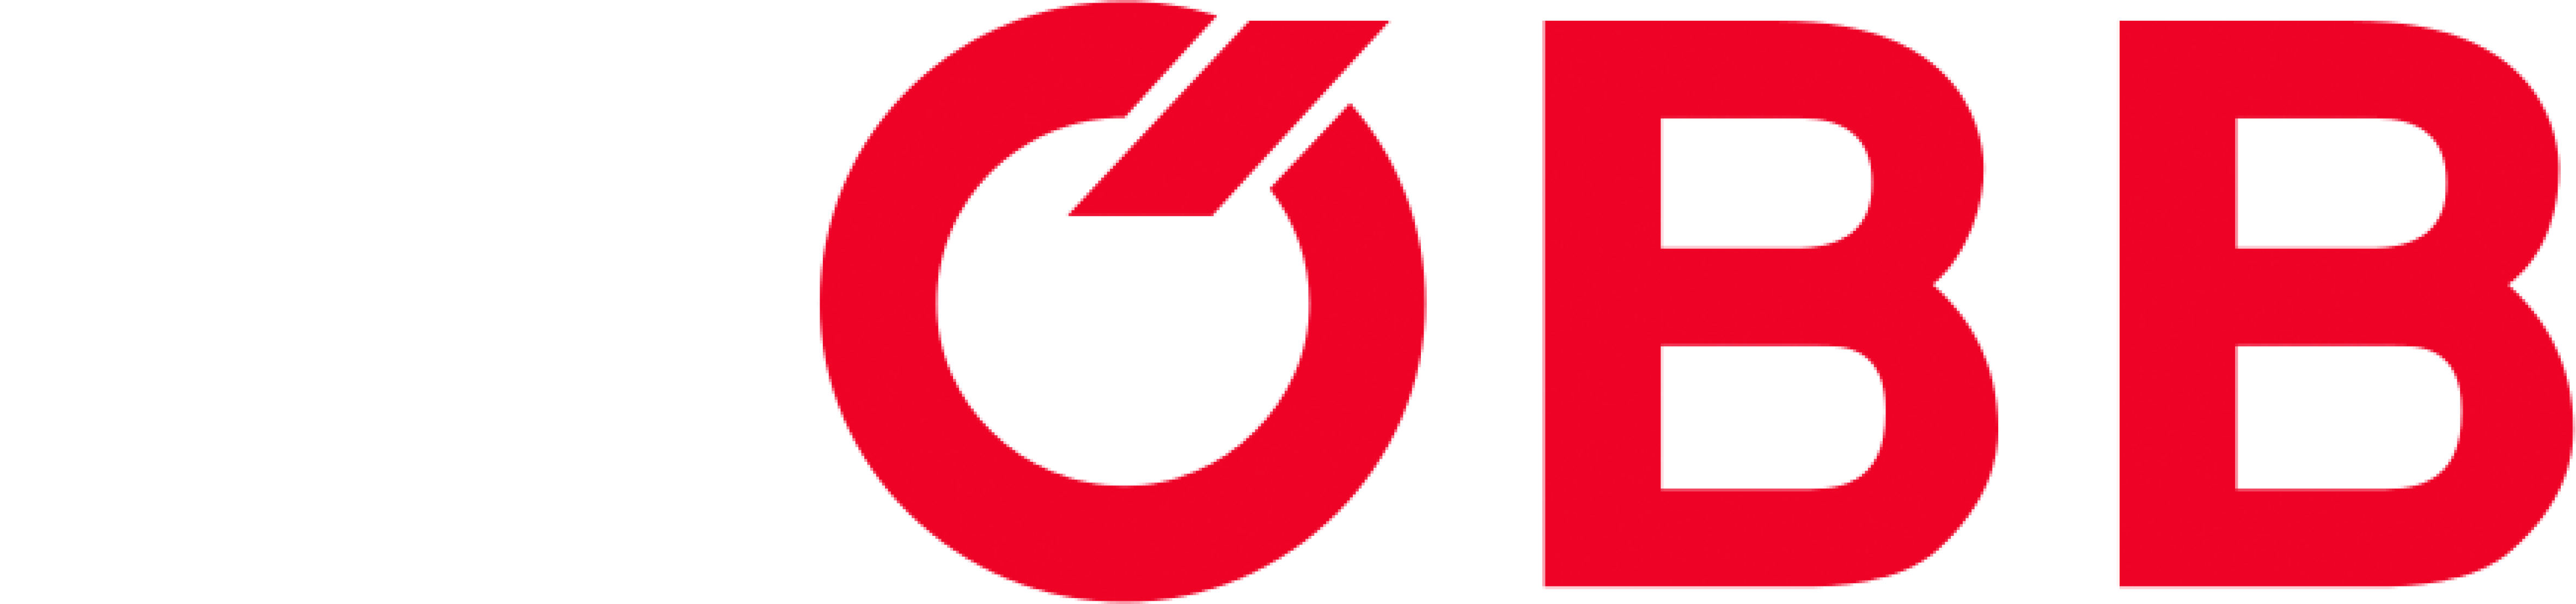 logo ÖBB, Austrian national rail operator